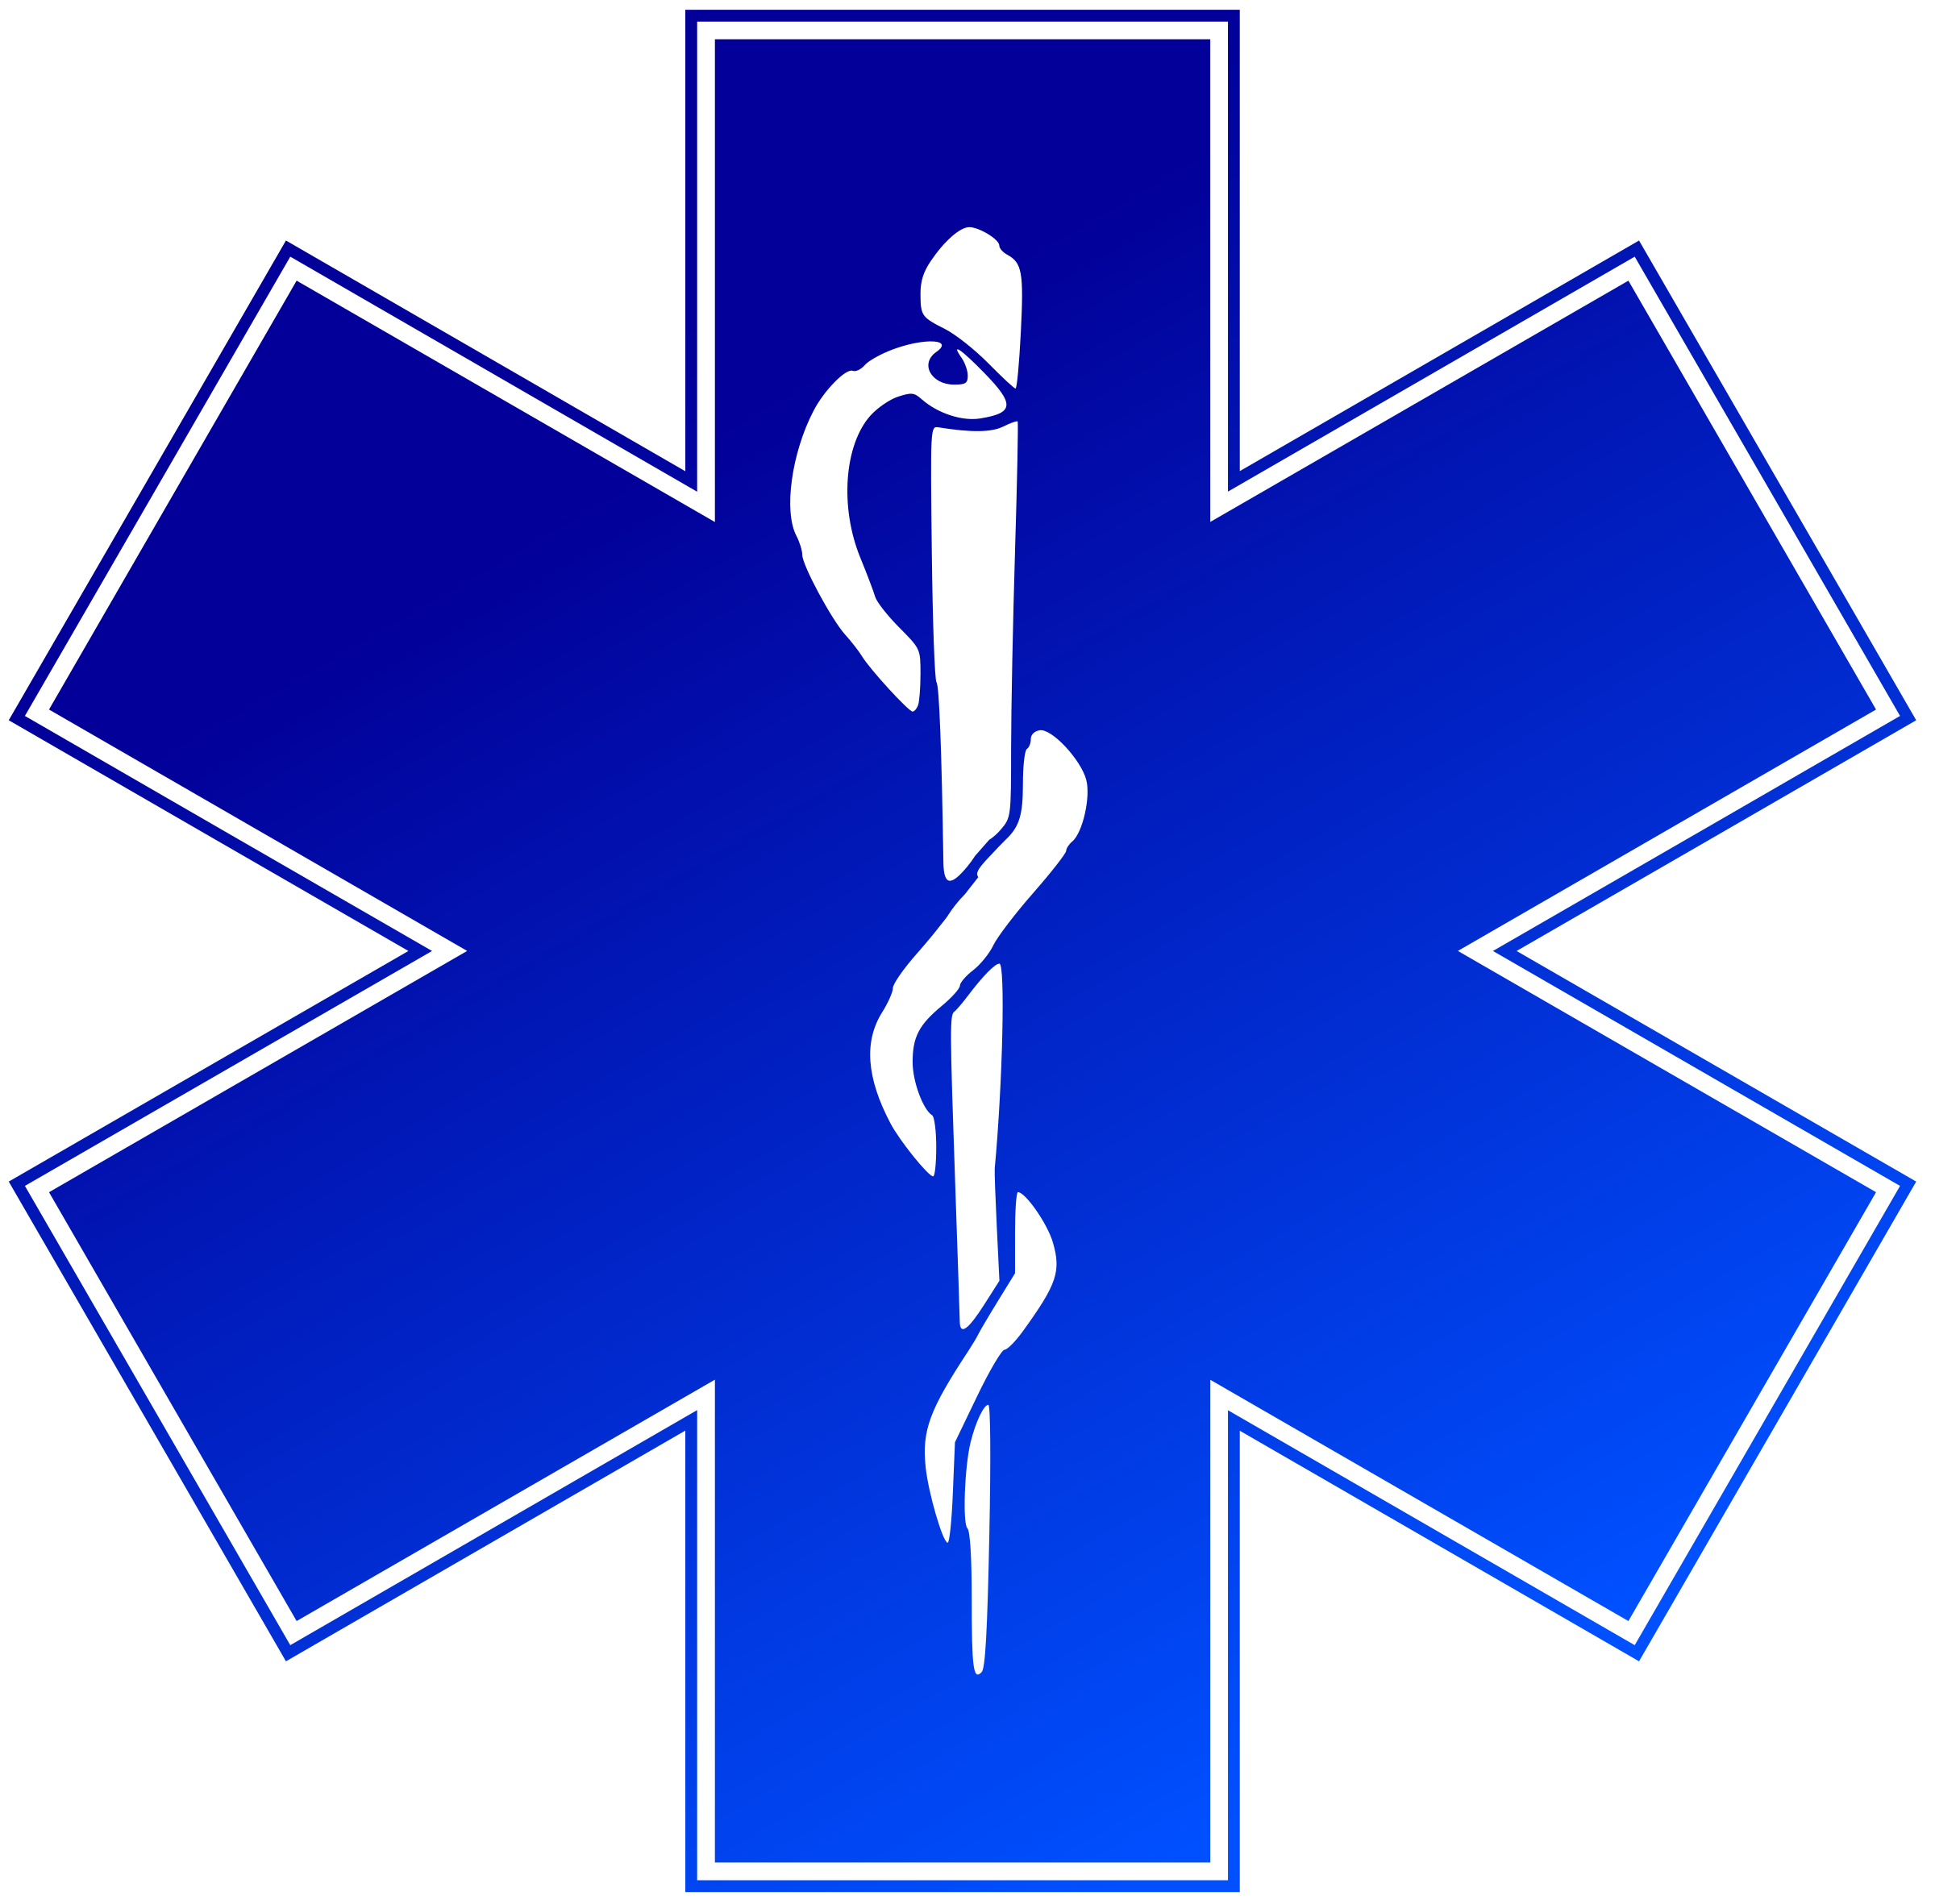 Clipart - EMS (emergency medical service) logo